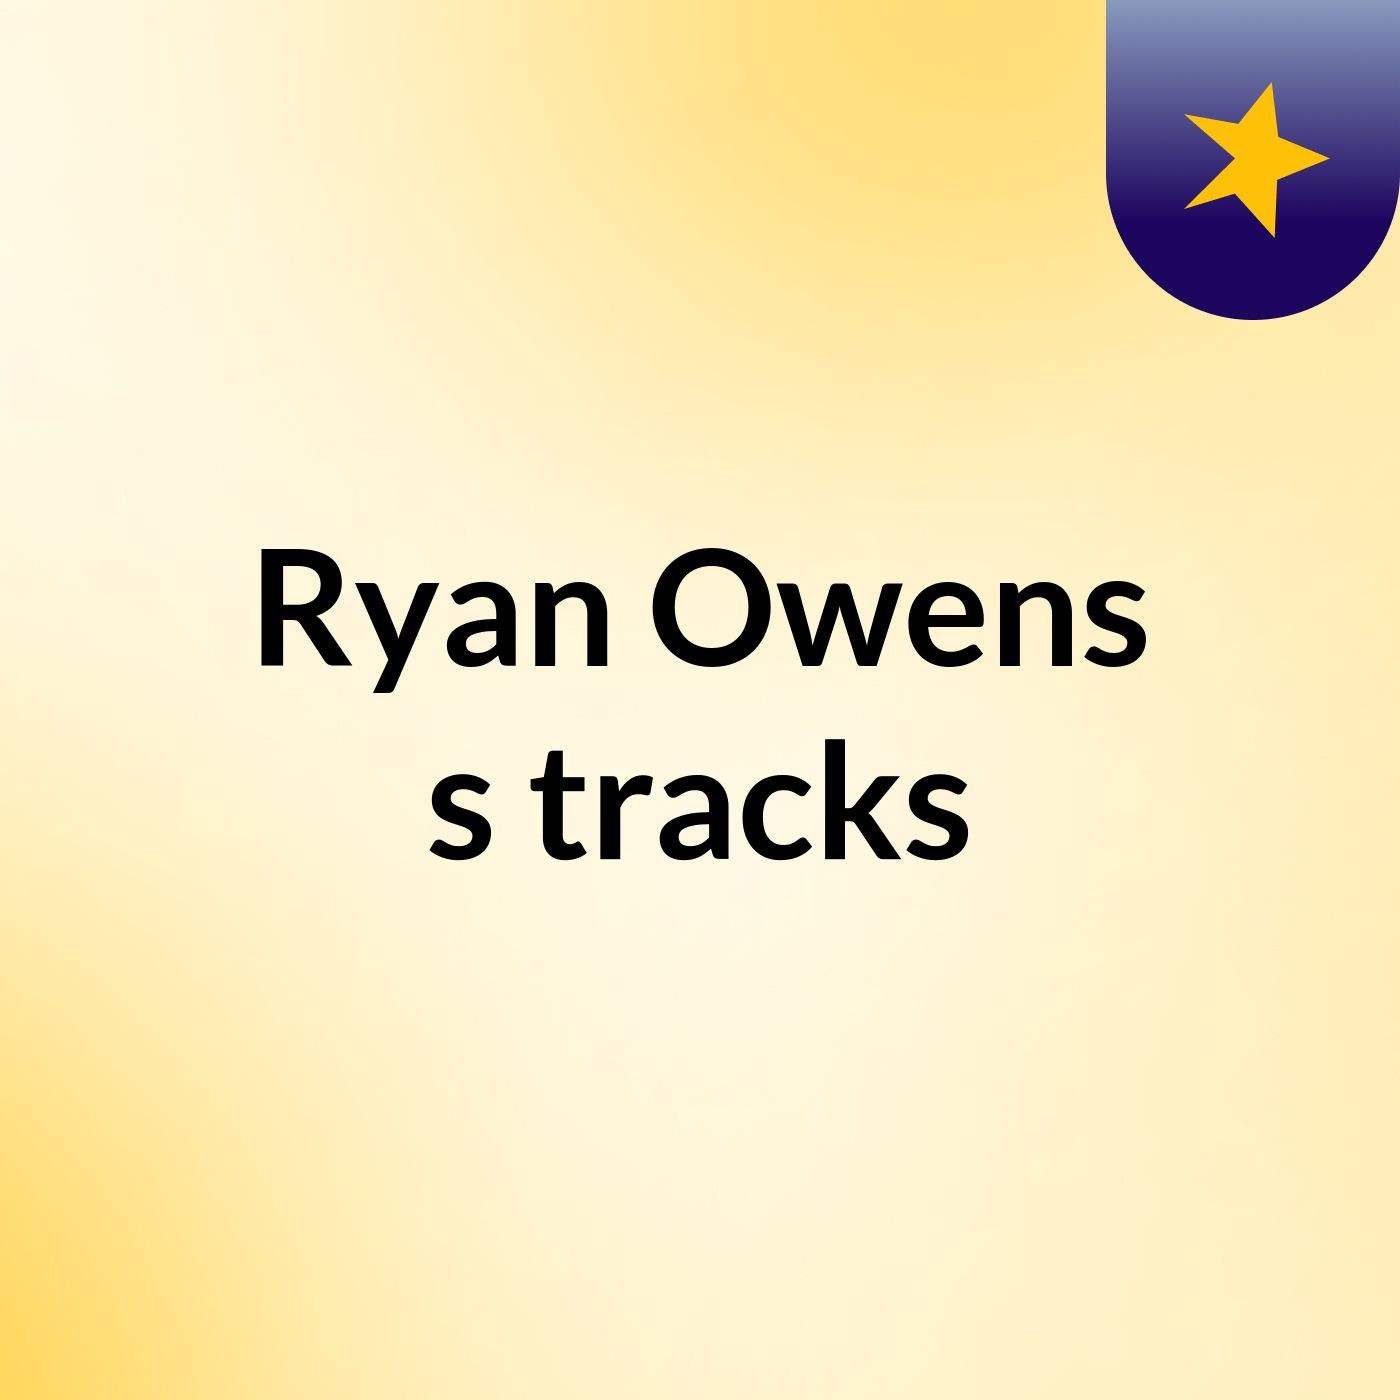 Ryan Owens's tracks